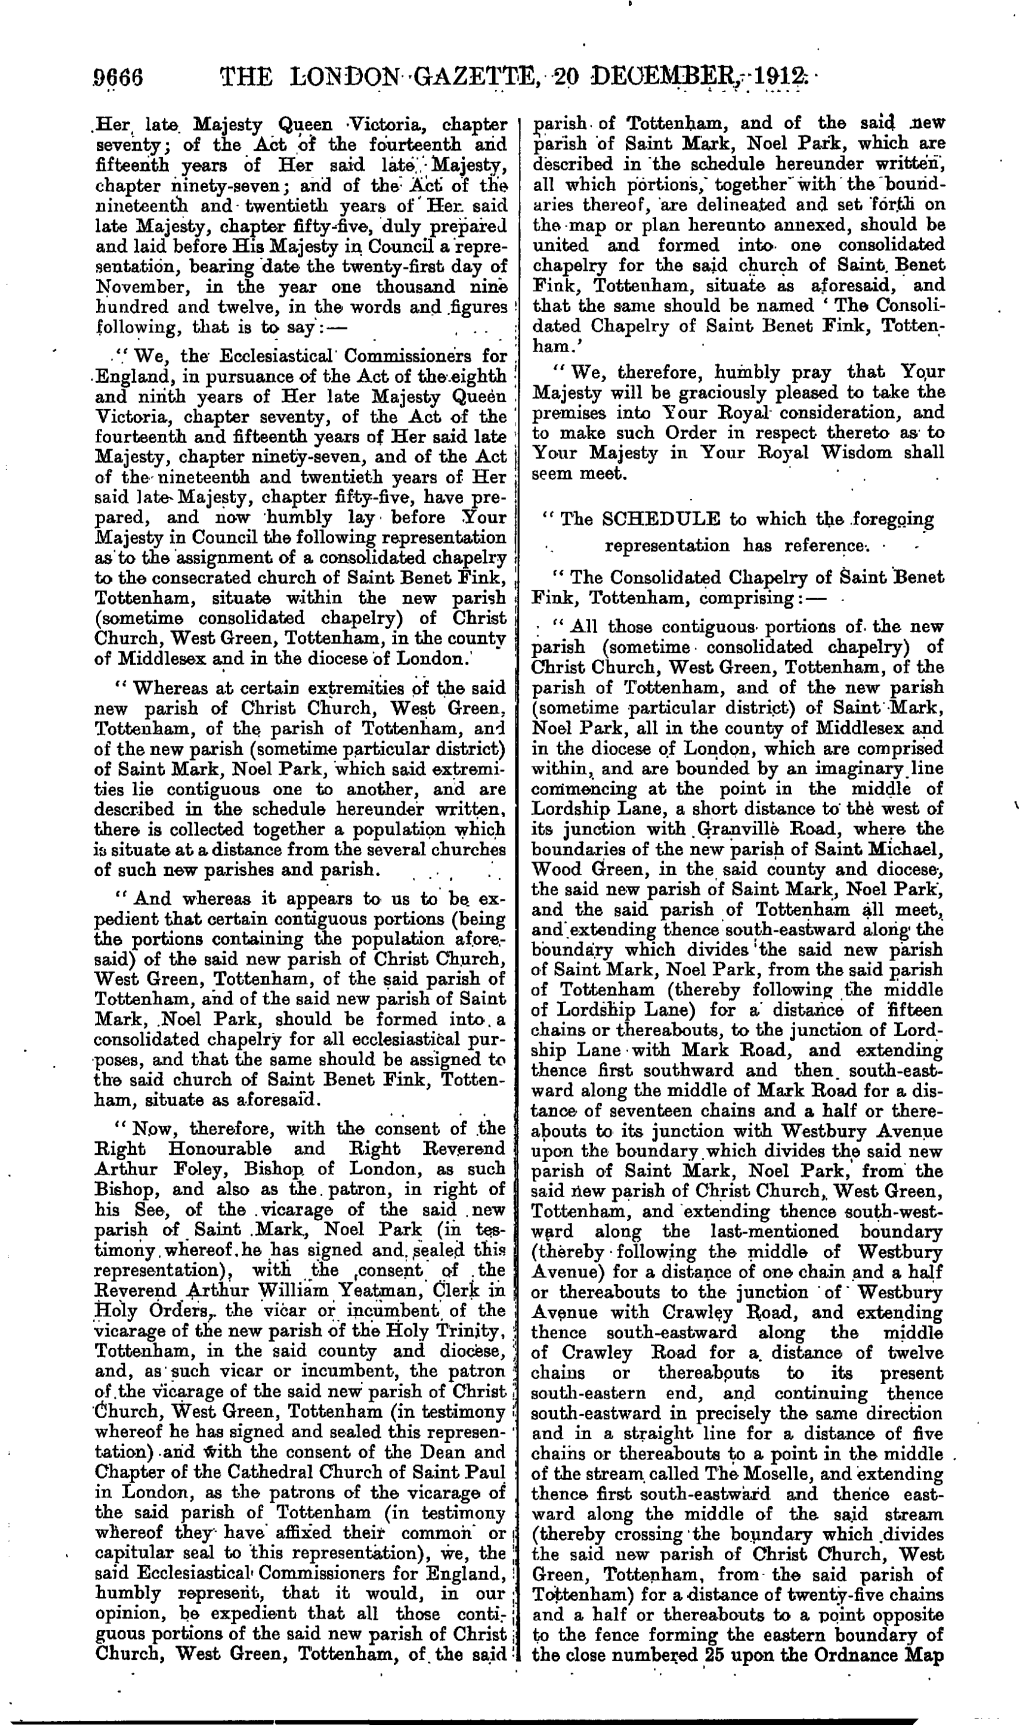 9666 the London Gazette, 20 December 191?